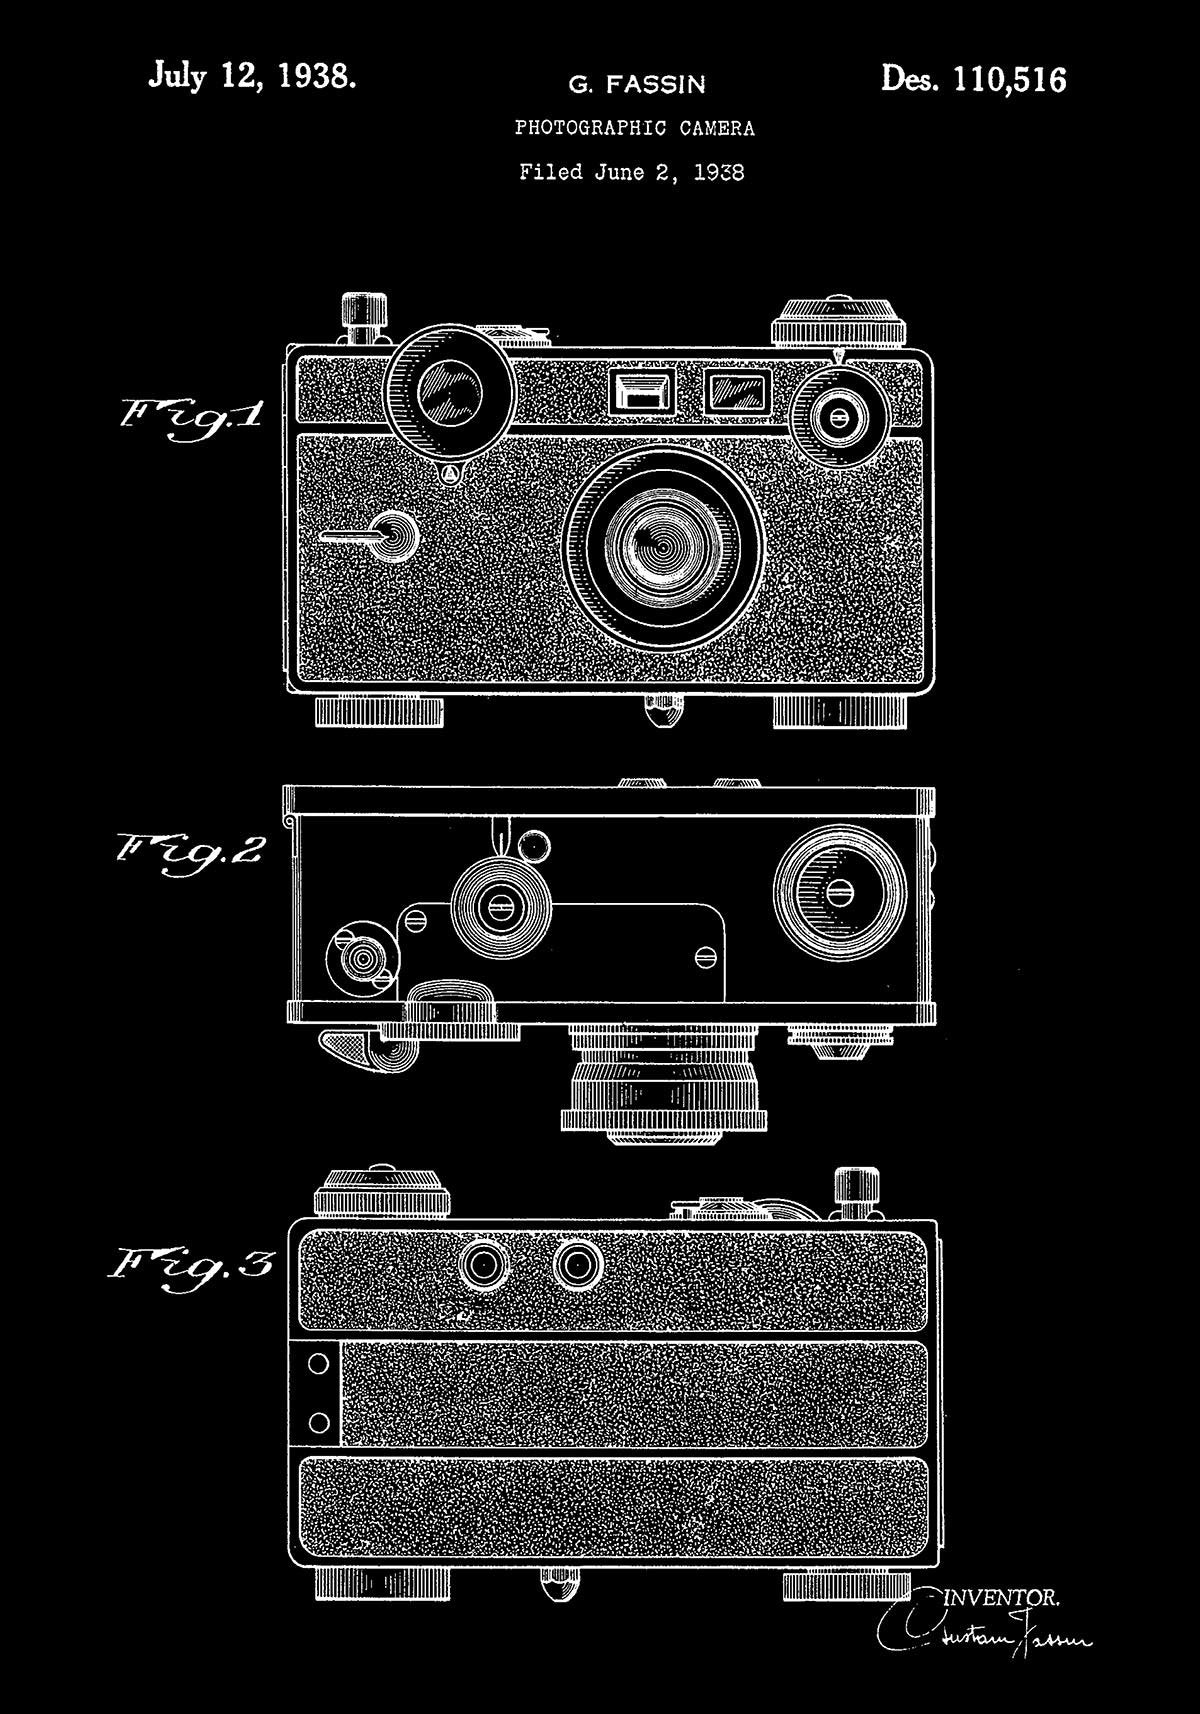 Photographic Camera Patent Poster